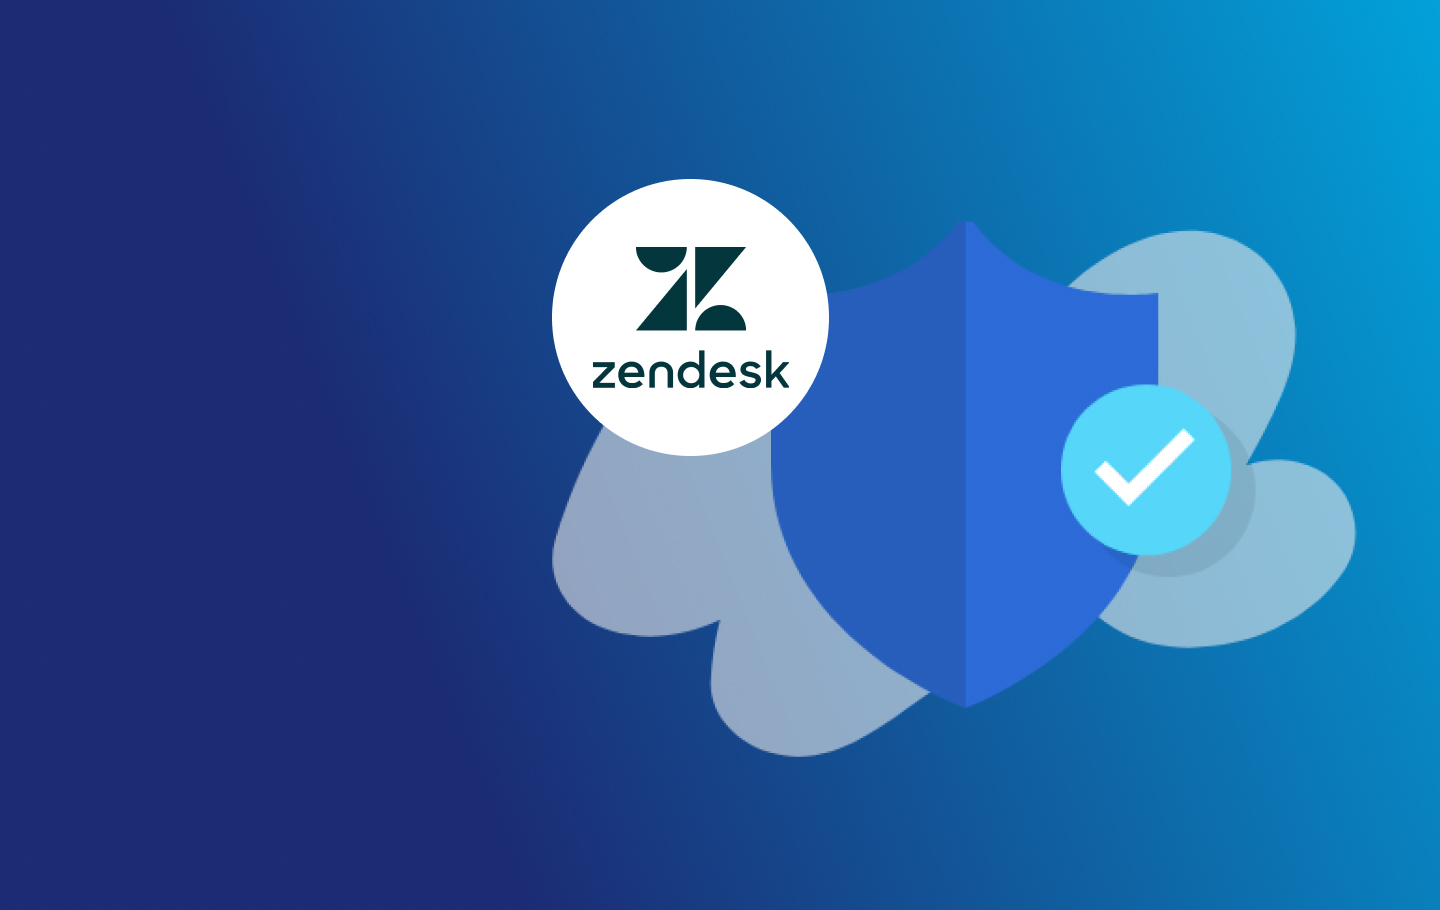 Zendesk logo on a blue background